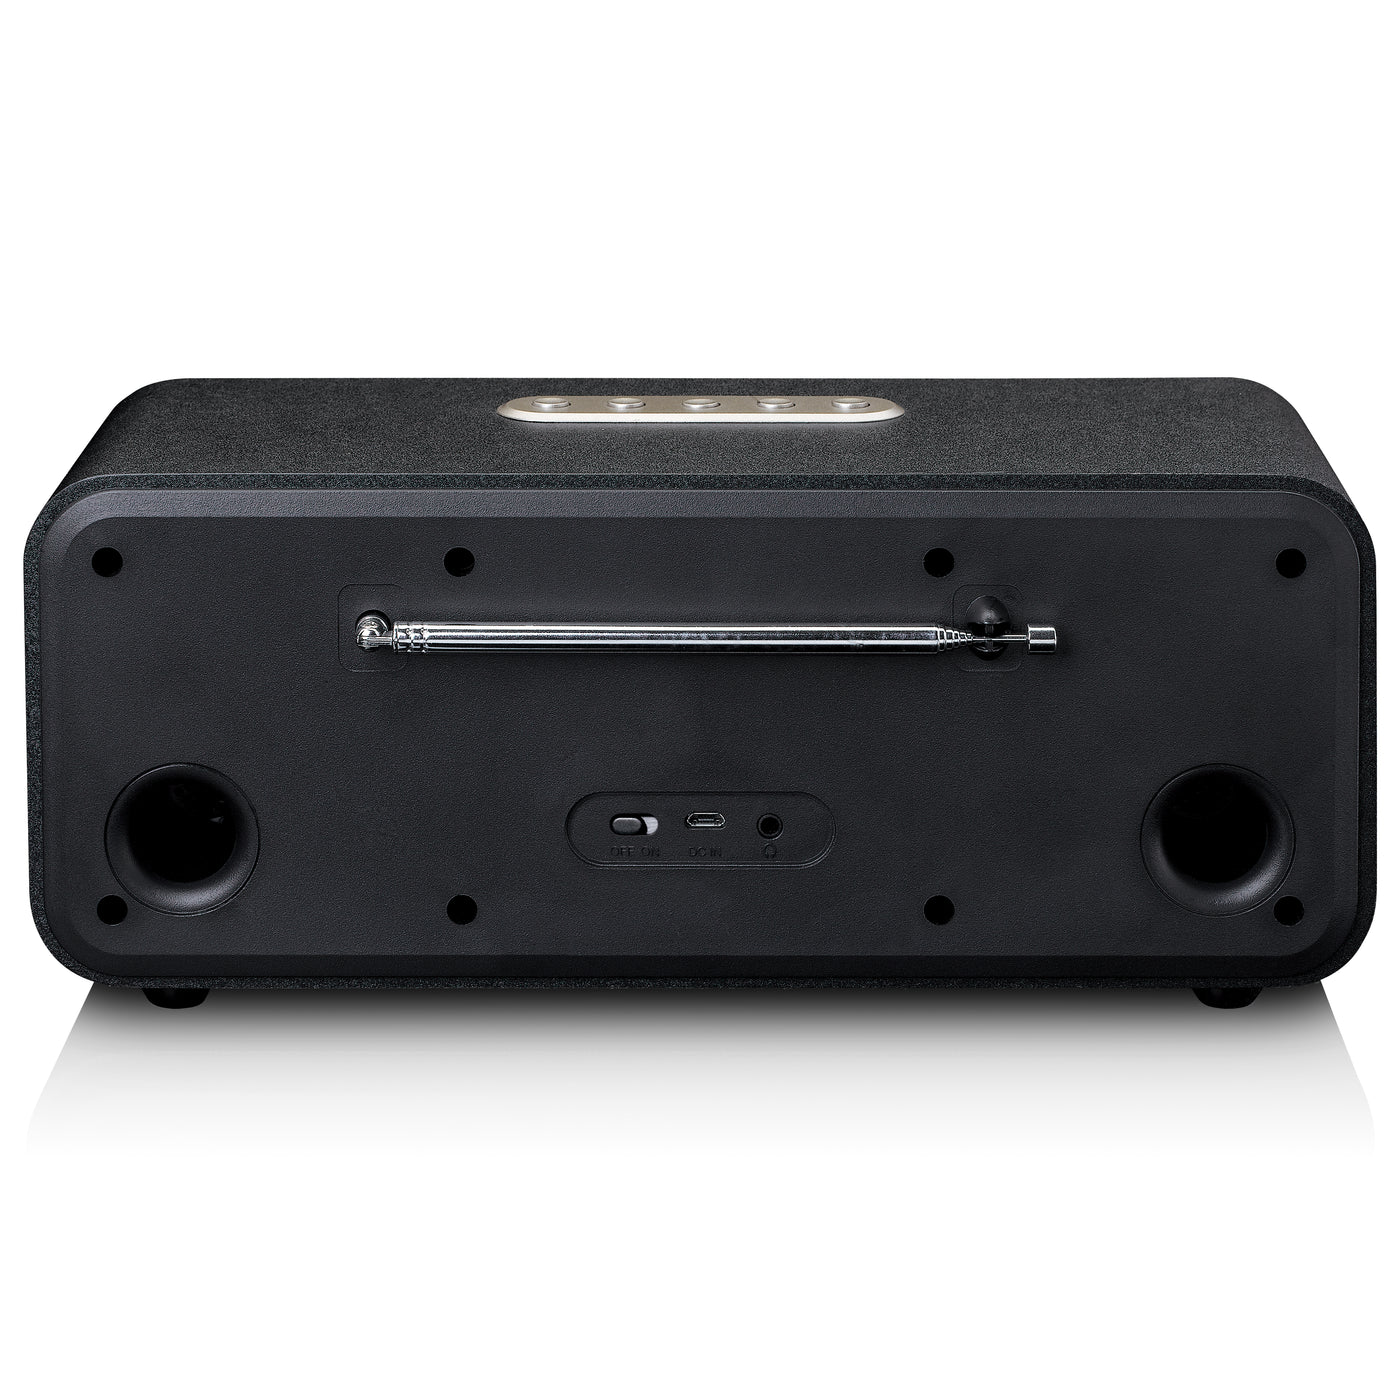 LENCO DAR-030BK - Stereo DAB+ FM Radio with Bluetooth® - Black